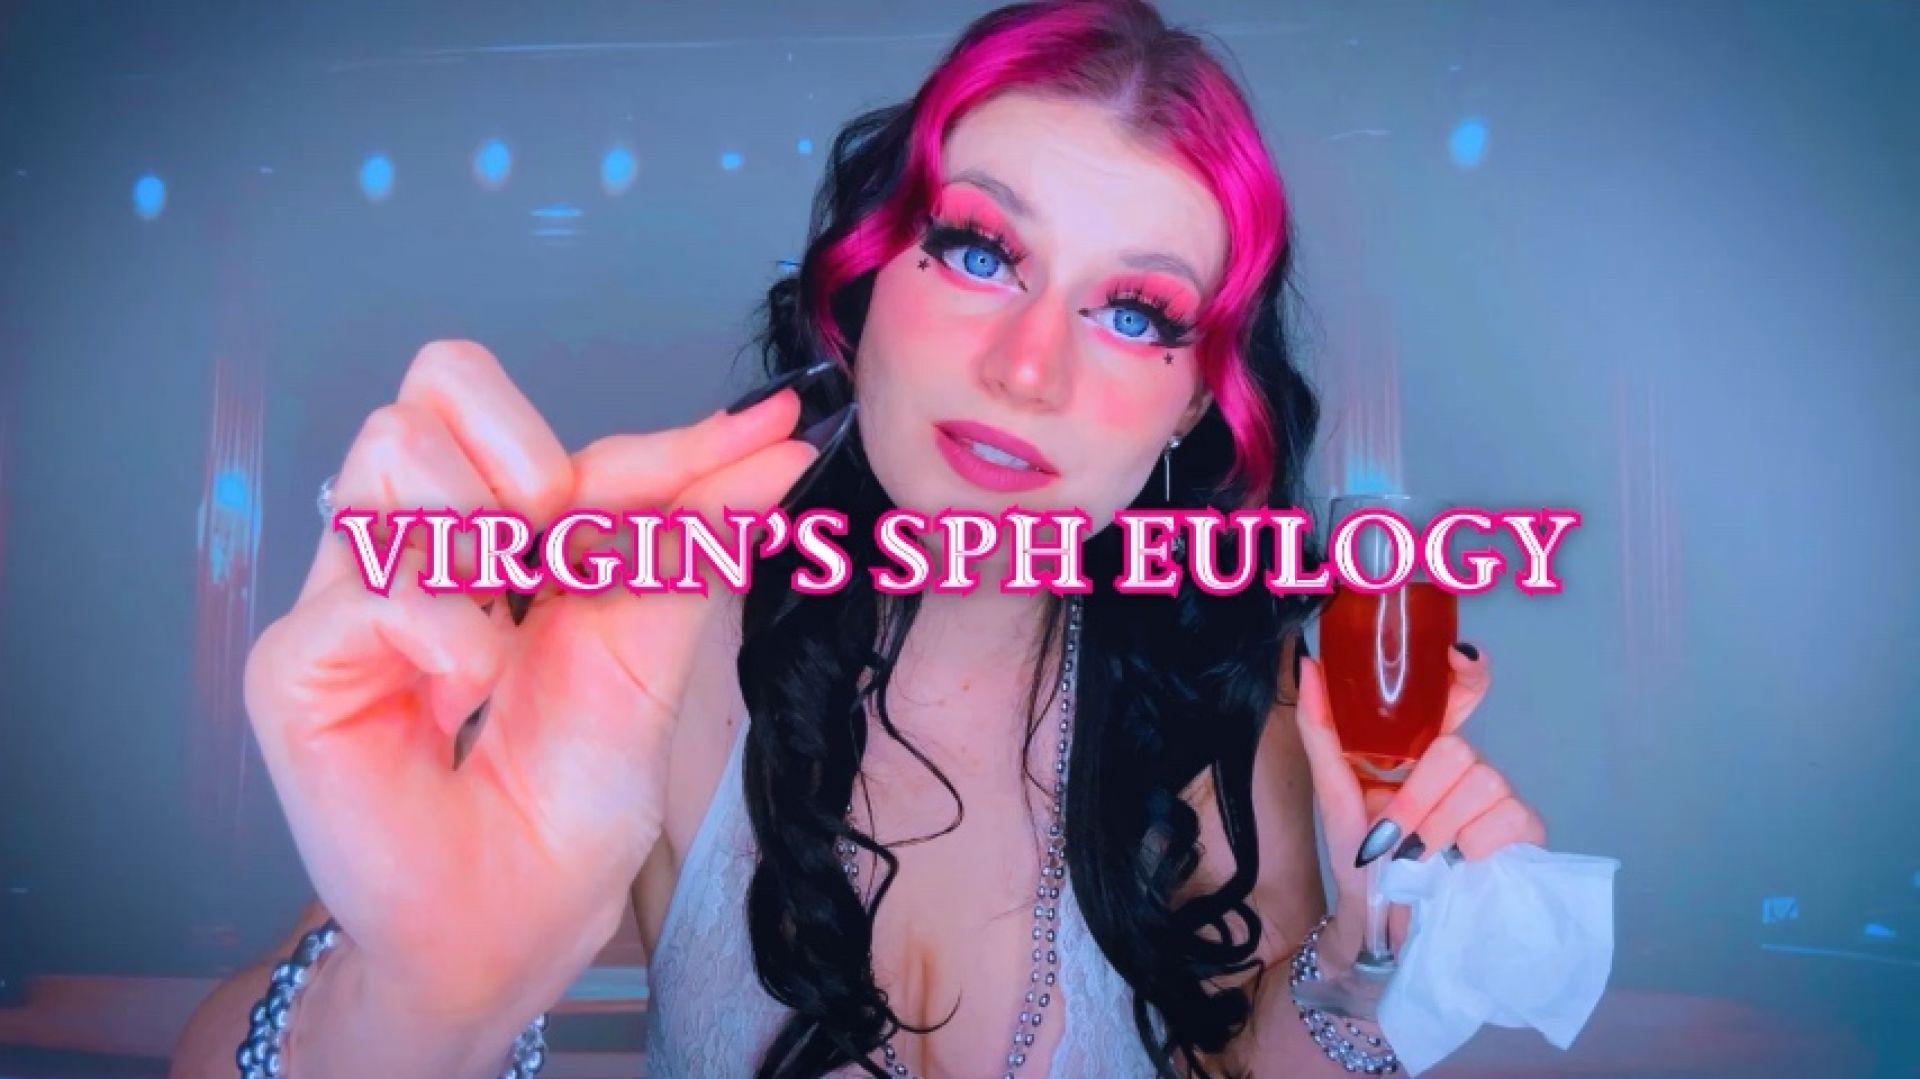 Virgins SPH Eulogy